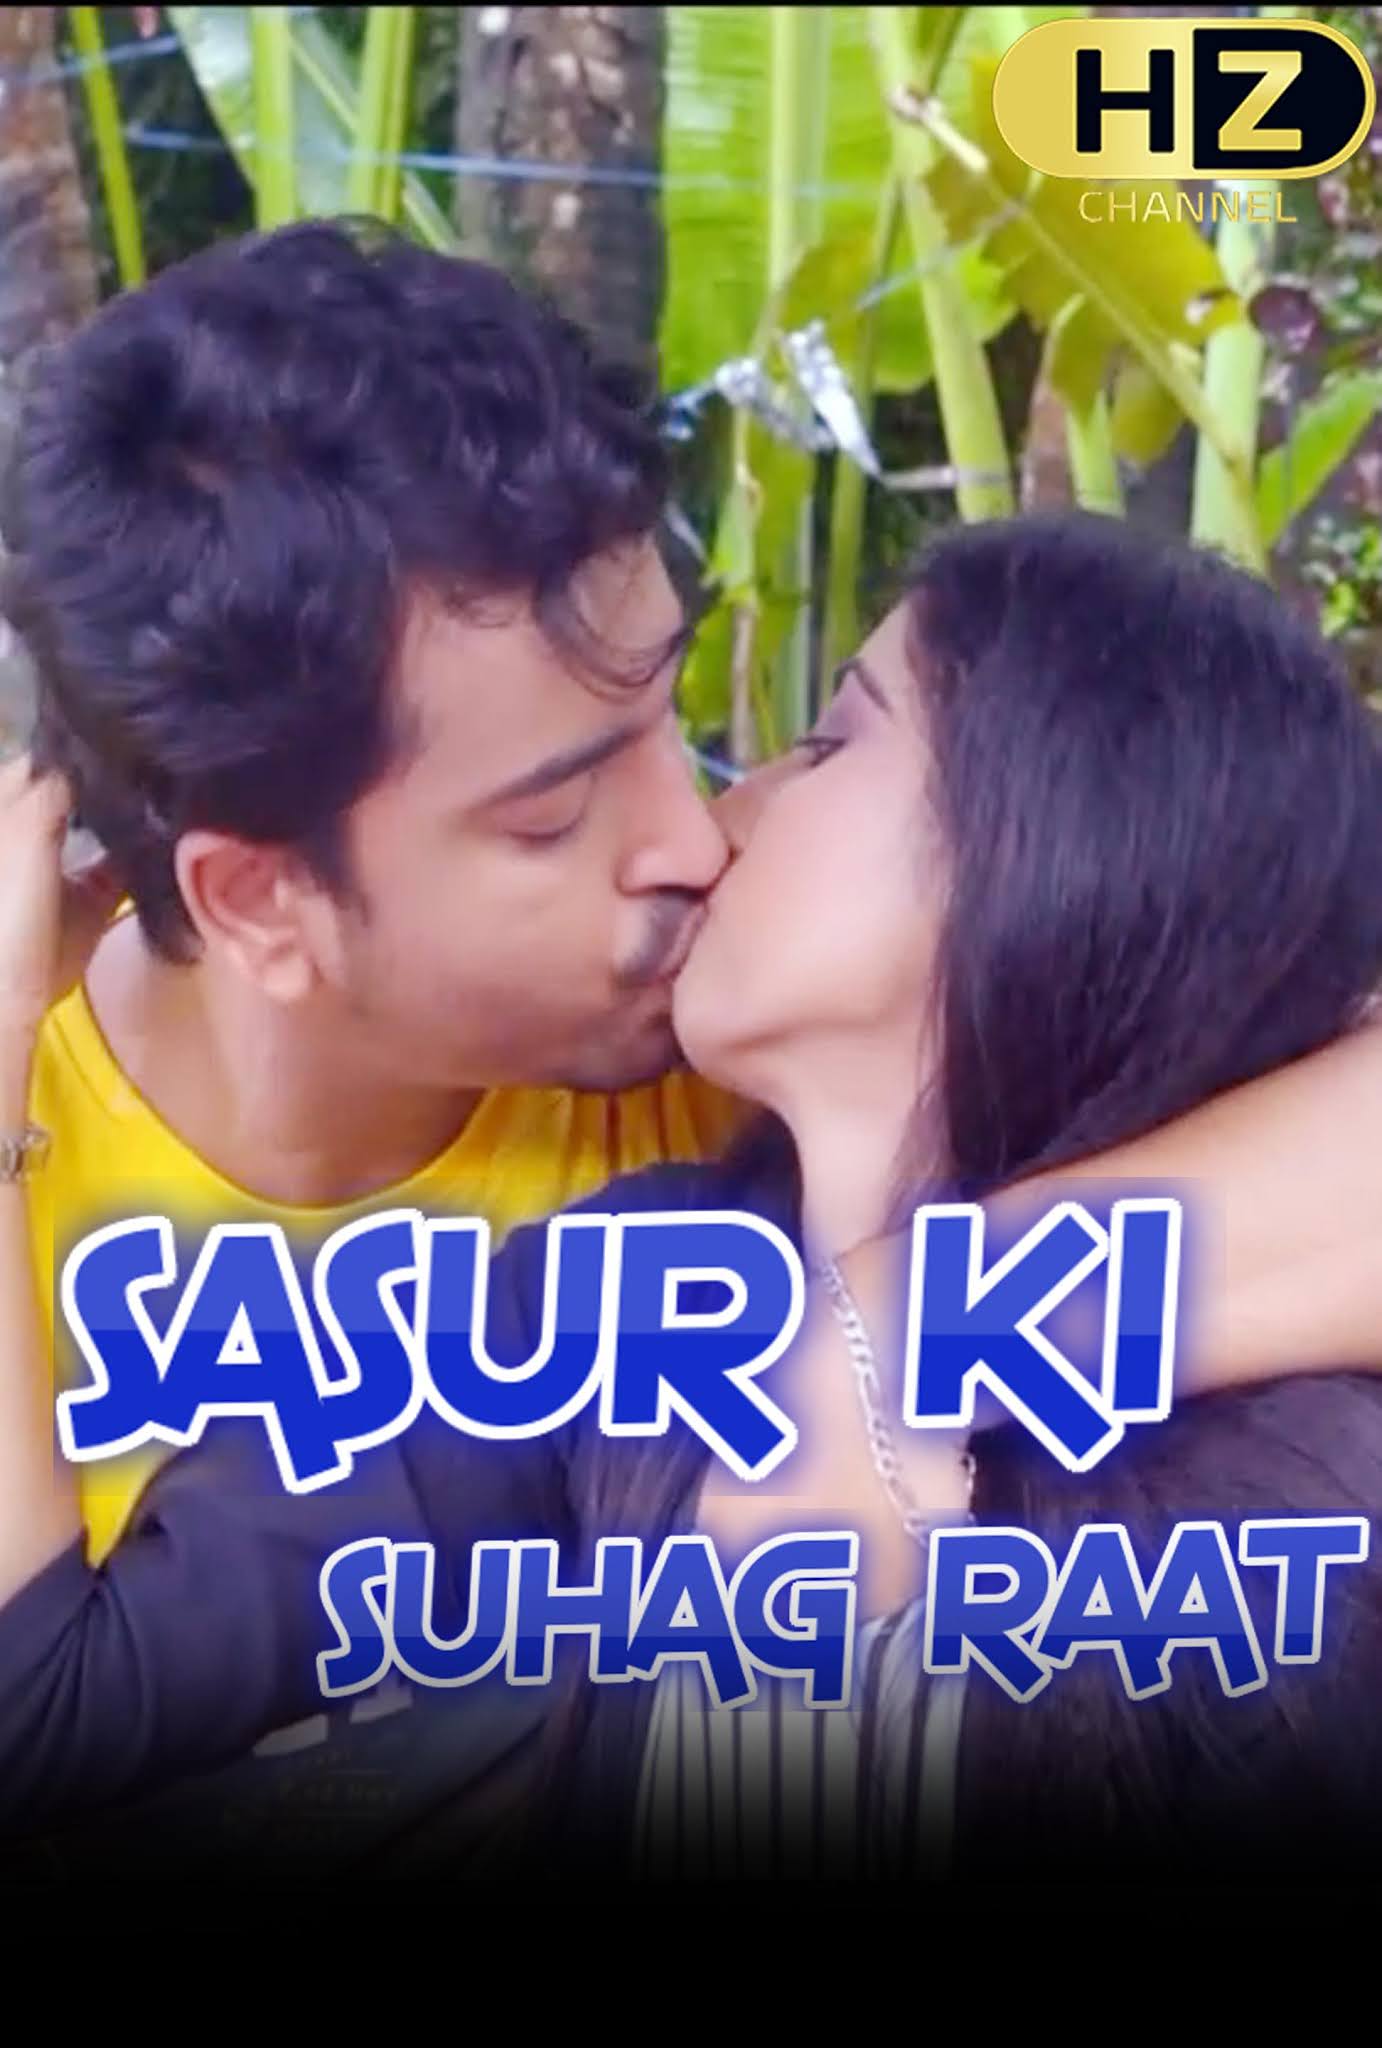 Sasur KI Suhagrat (2020) Season 01 Episodes 02 Hindi Hot Web Series Download Hootzyc Channel Exclusive Series | Watch Online